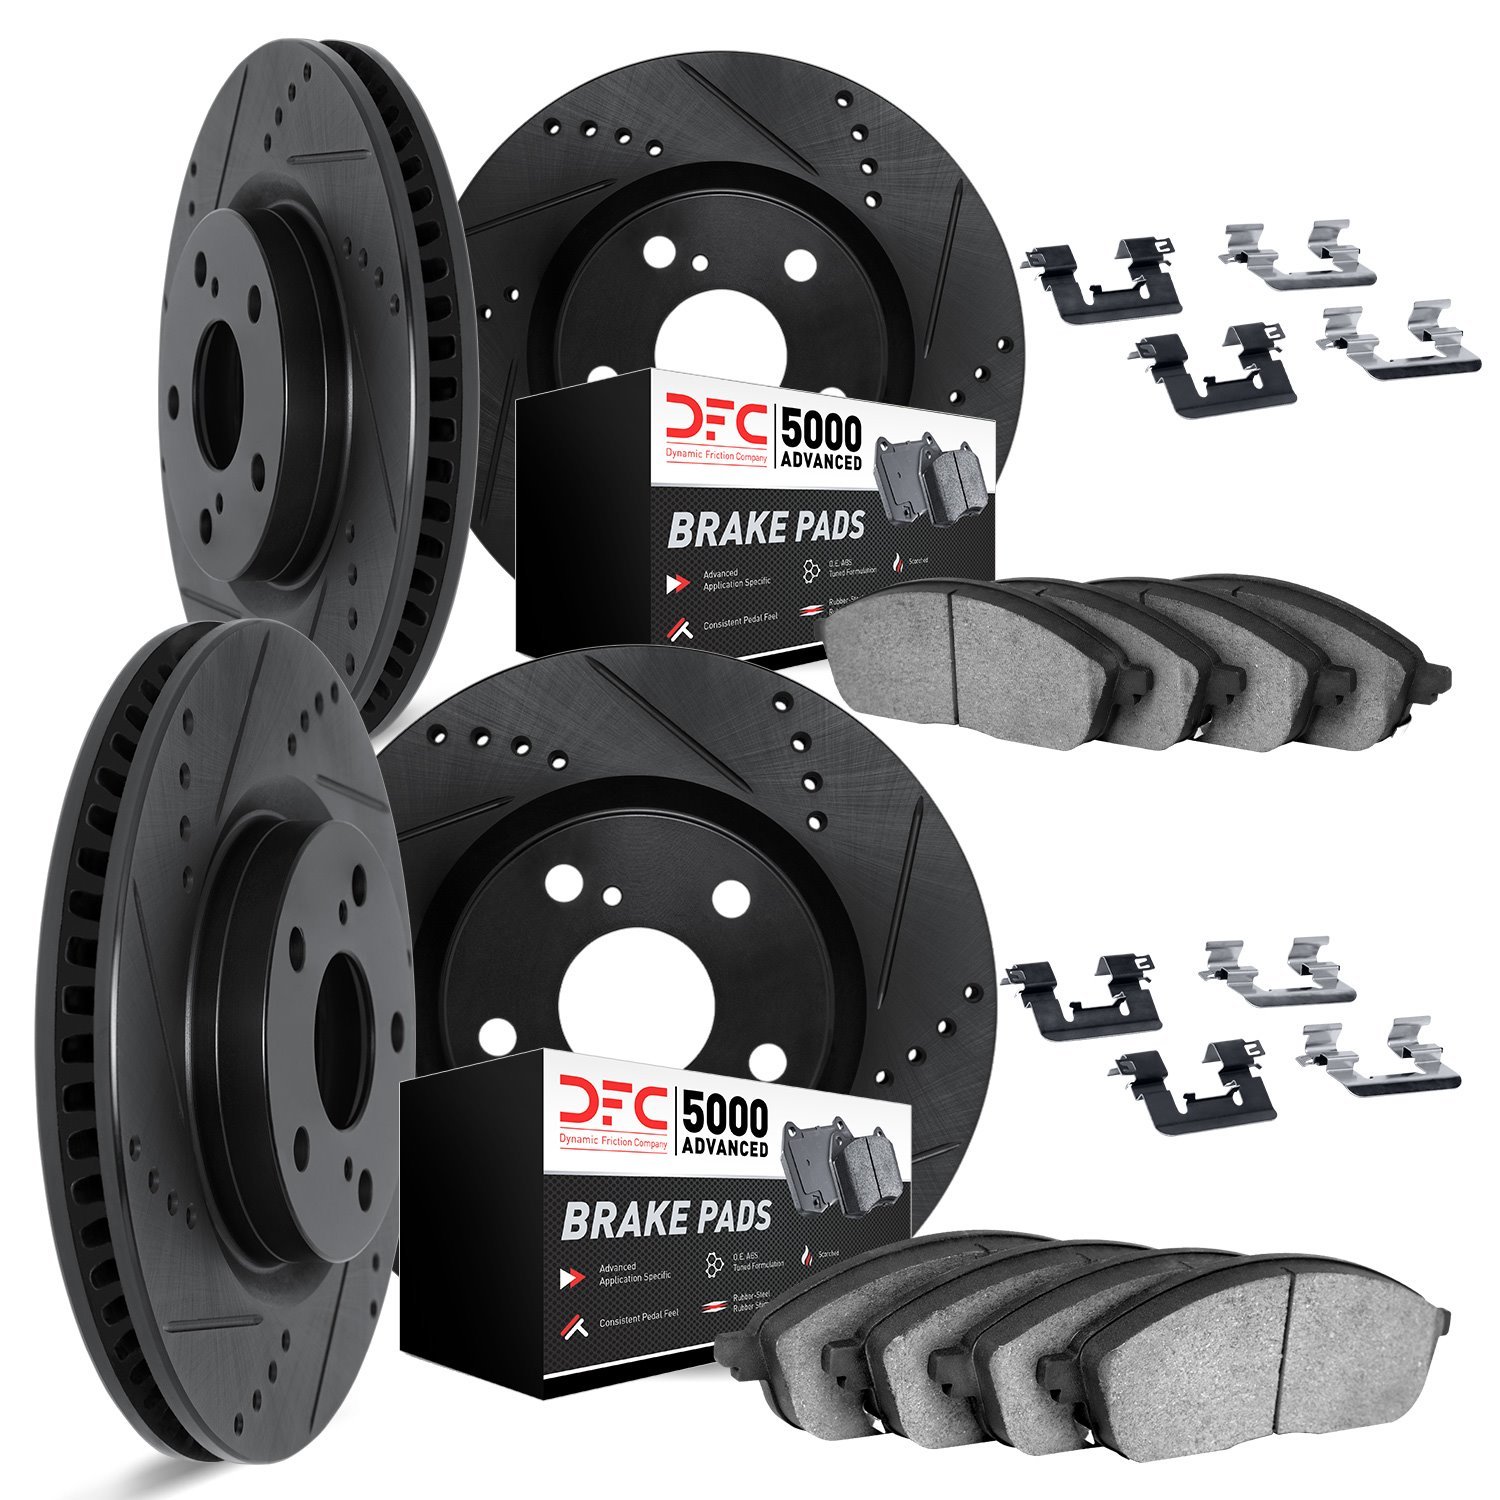 8514-67048 Drilled/Slotted Brake Rotors w/5000 Advanced Brake Pads Kit & Hardware [Black], 2011-2019 Infiniti/Nissan, Position: